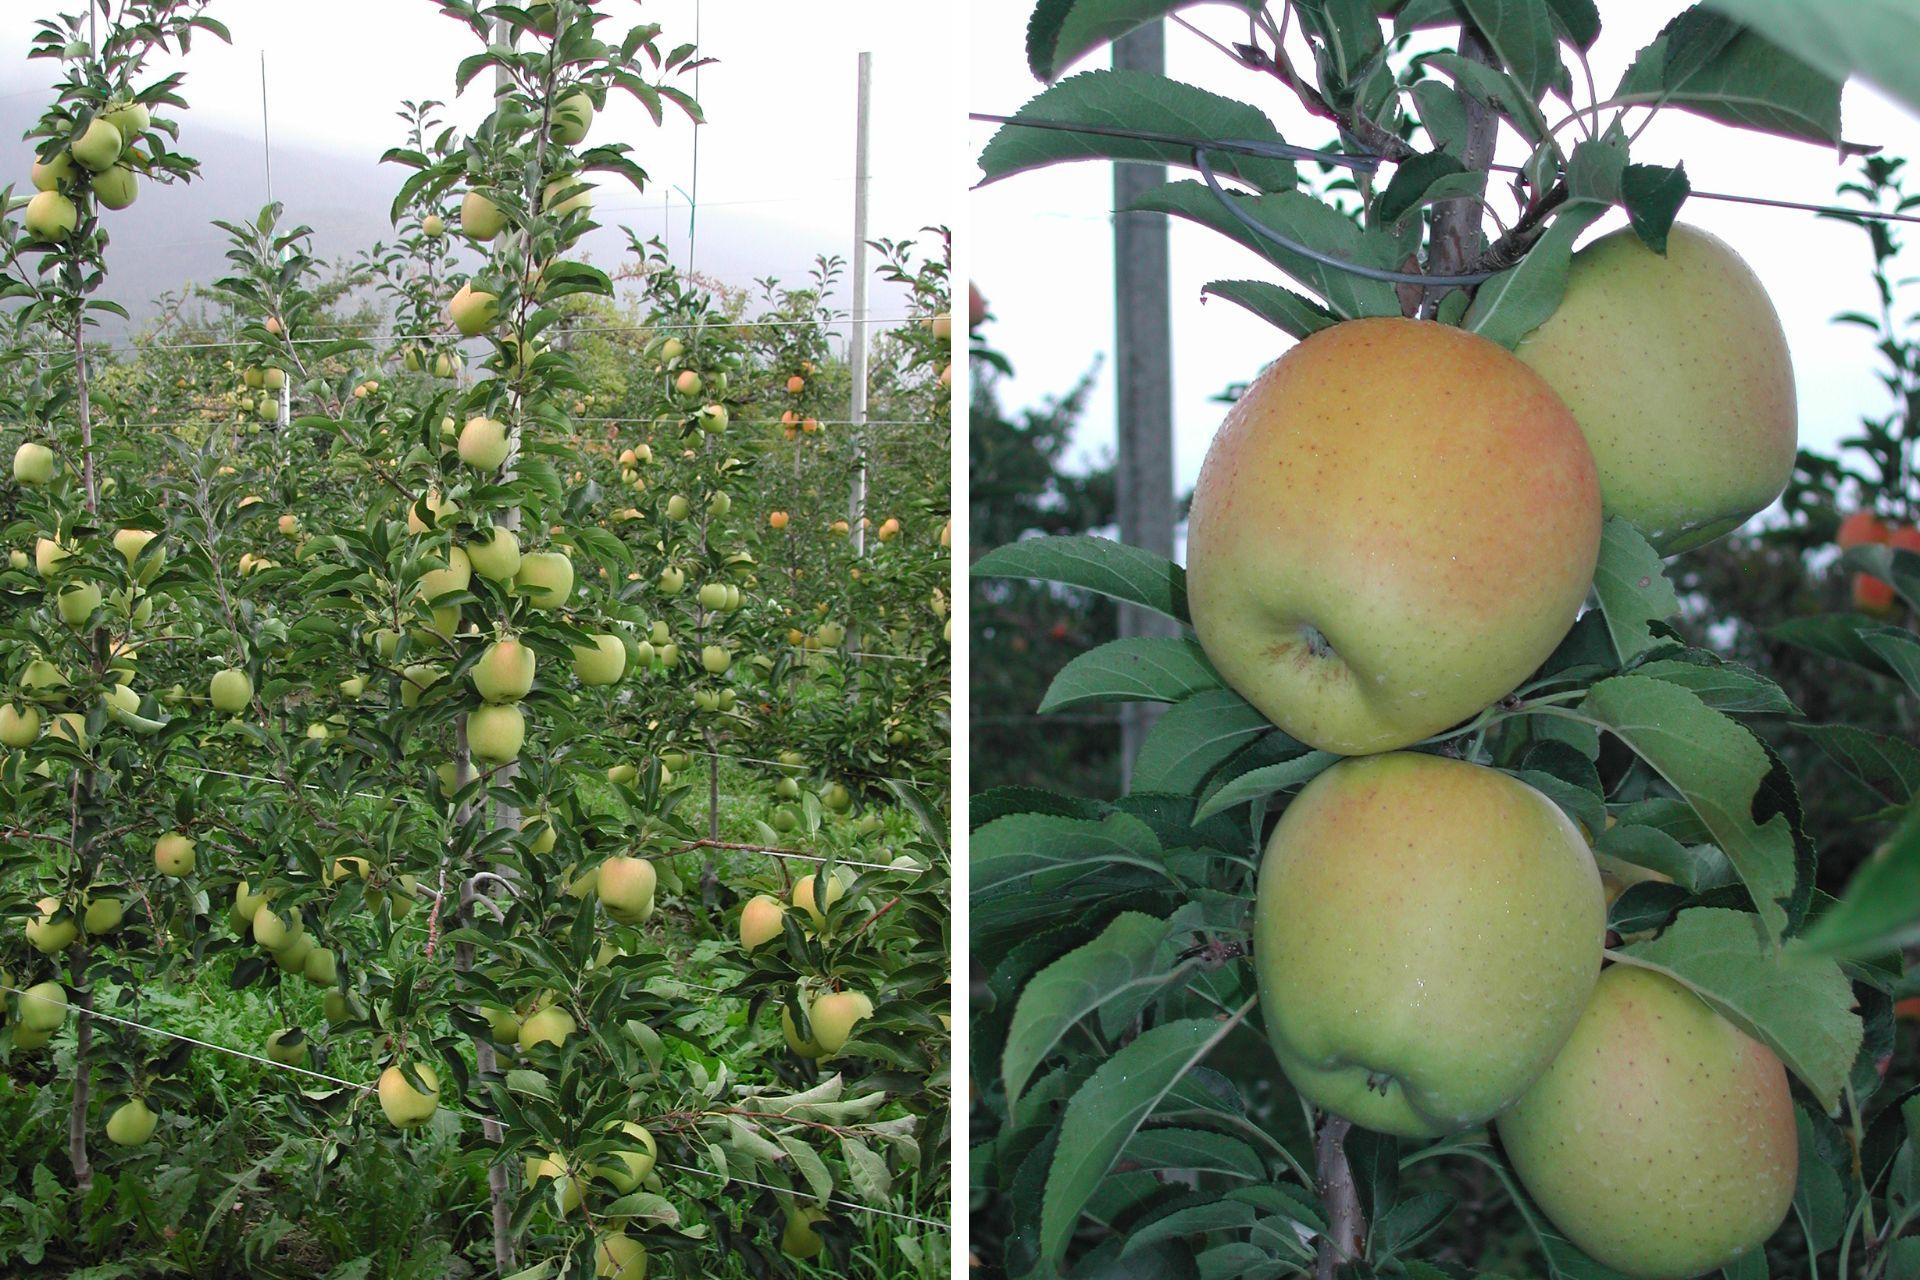 Risultati-in-melicoltura-con-BioAksxter-results-with-BioAksxter-apple-growing.jpg